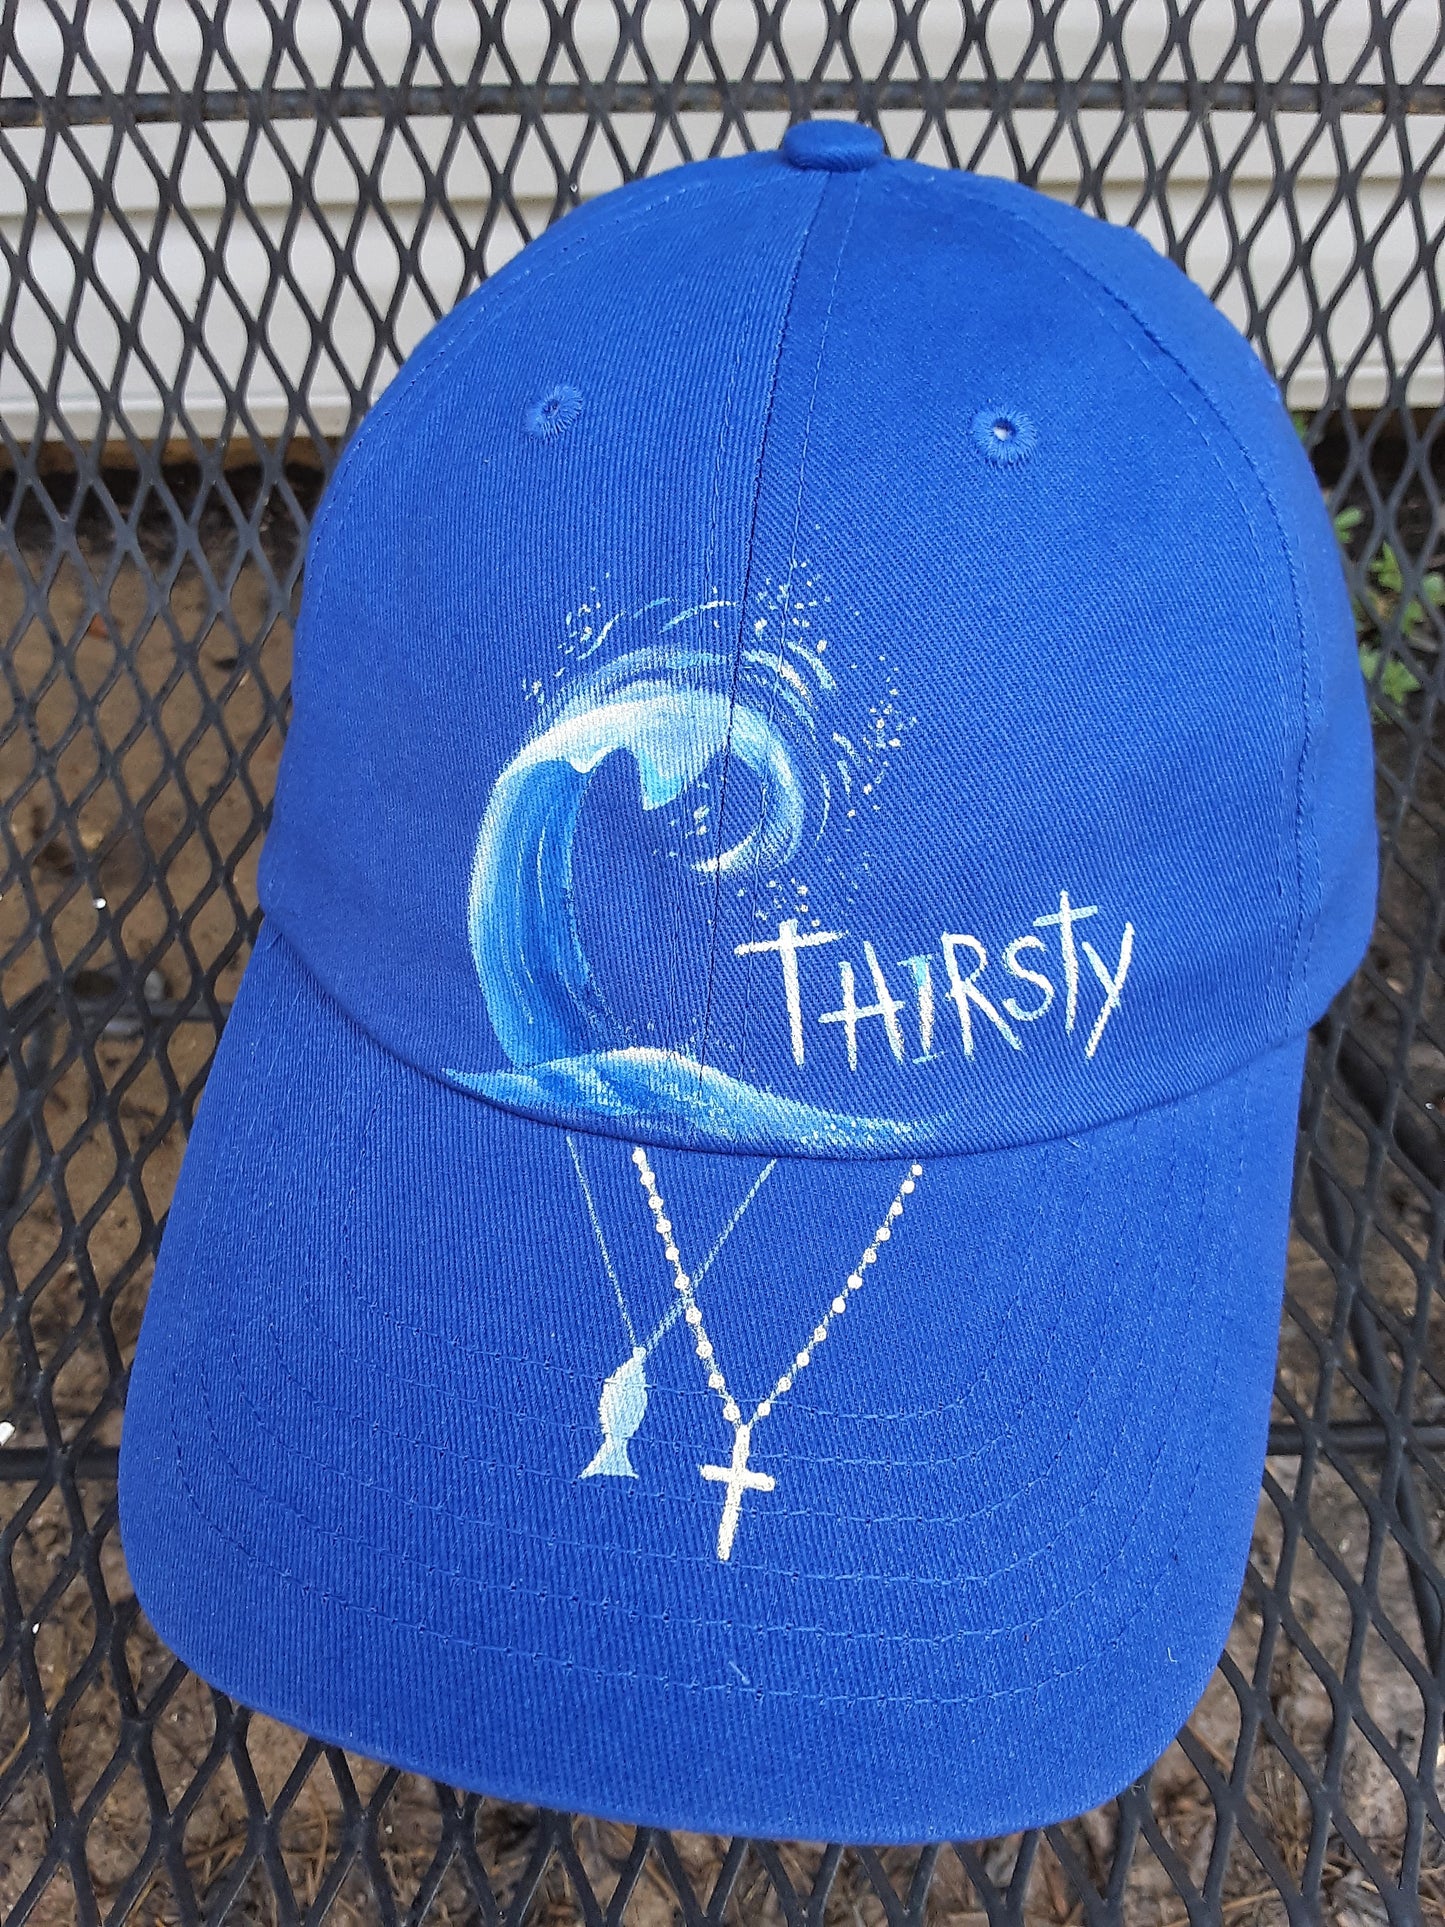 Thirsty Baseball Cap